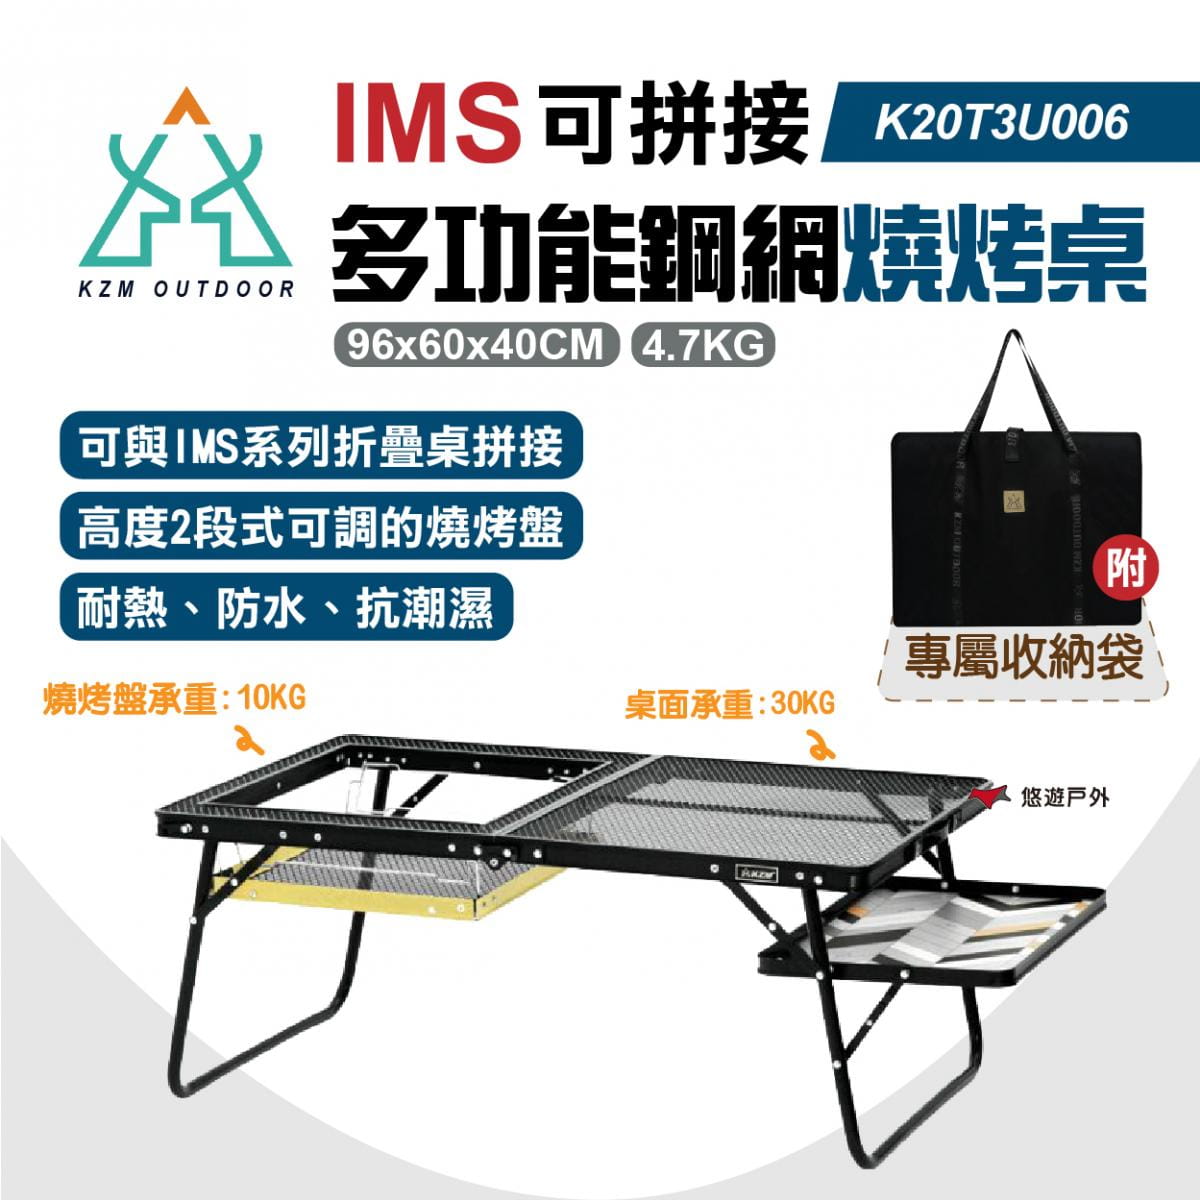 【KZM】IMS多功能鋼網燒烤桌含收納袋_K20T3U006  (悠遊戶外) 1